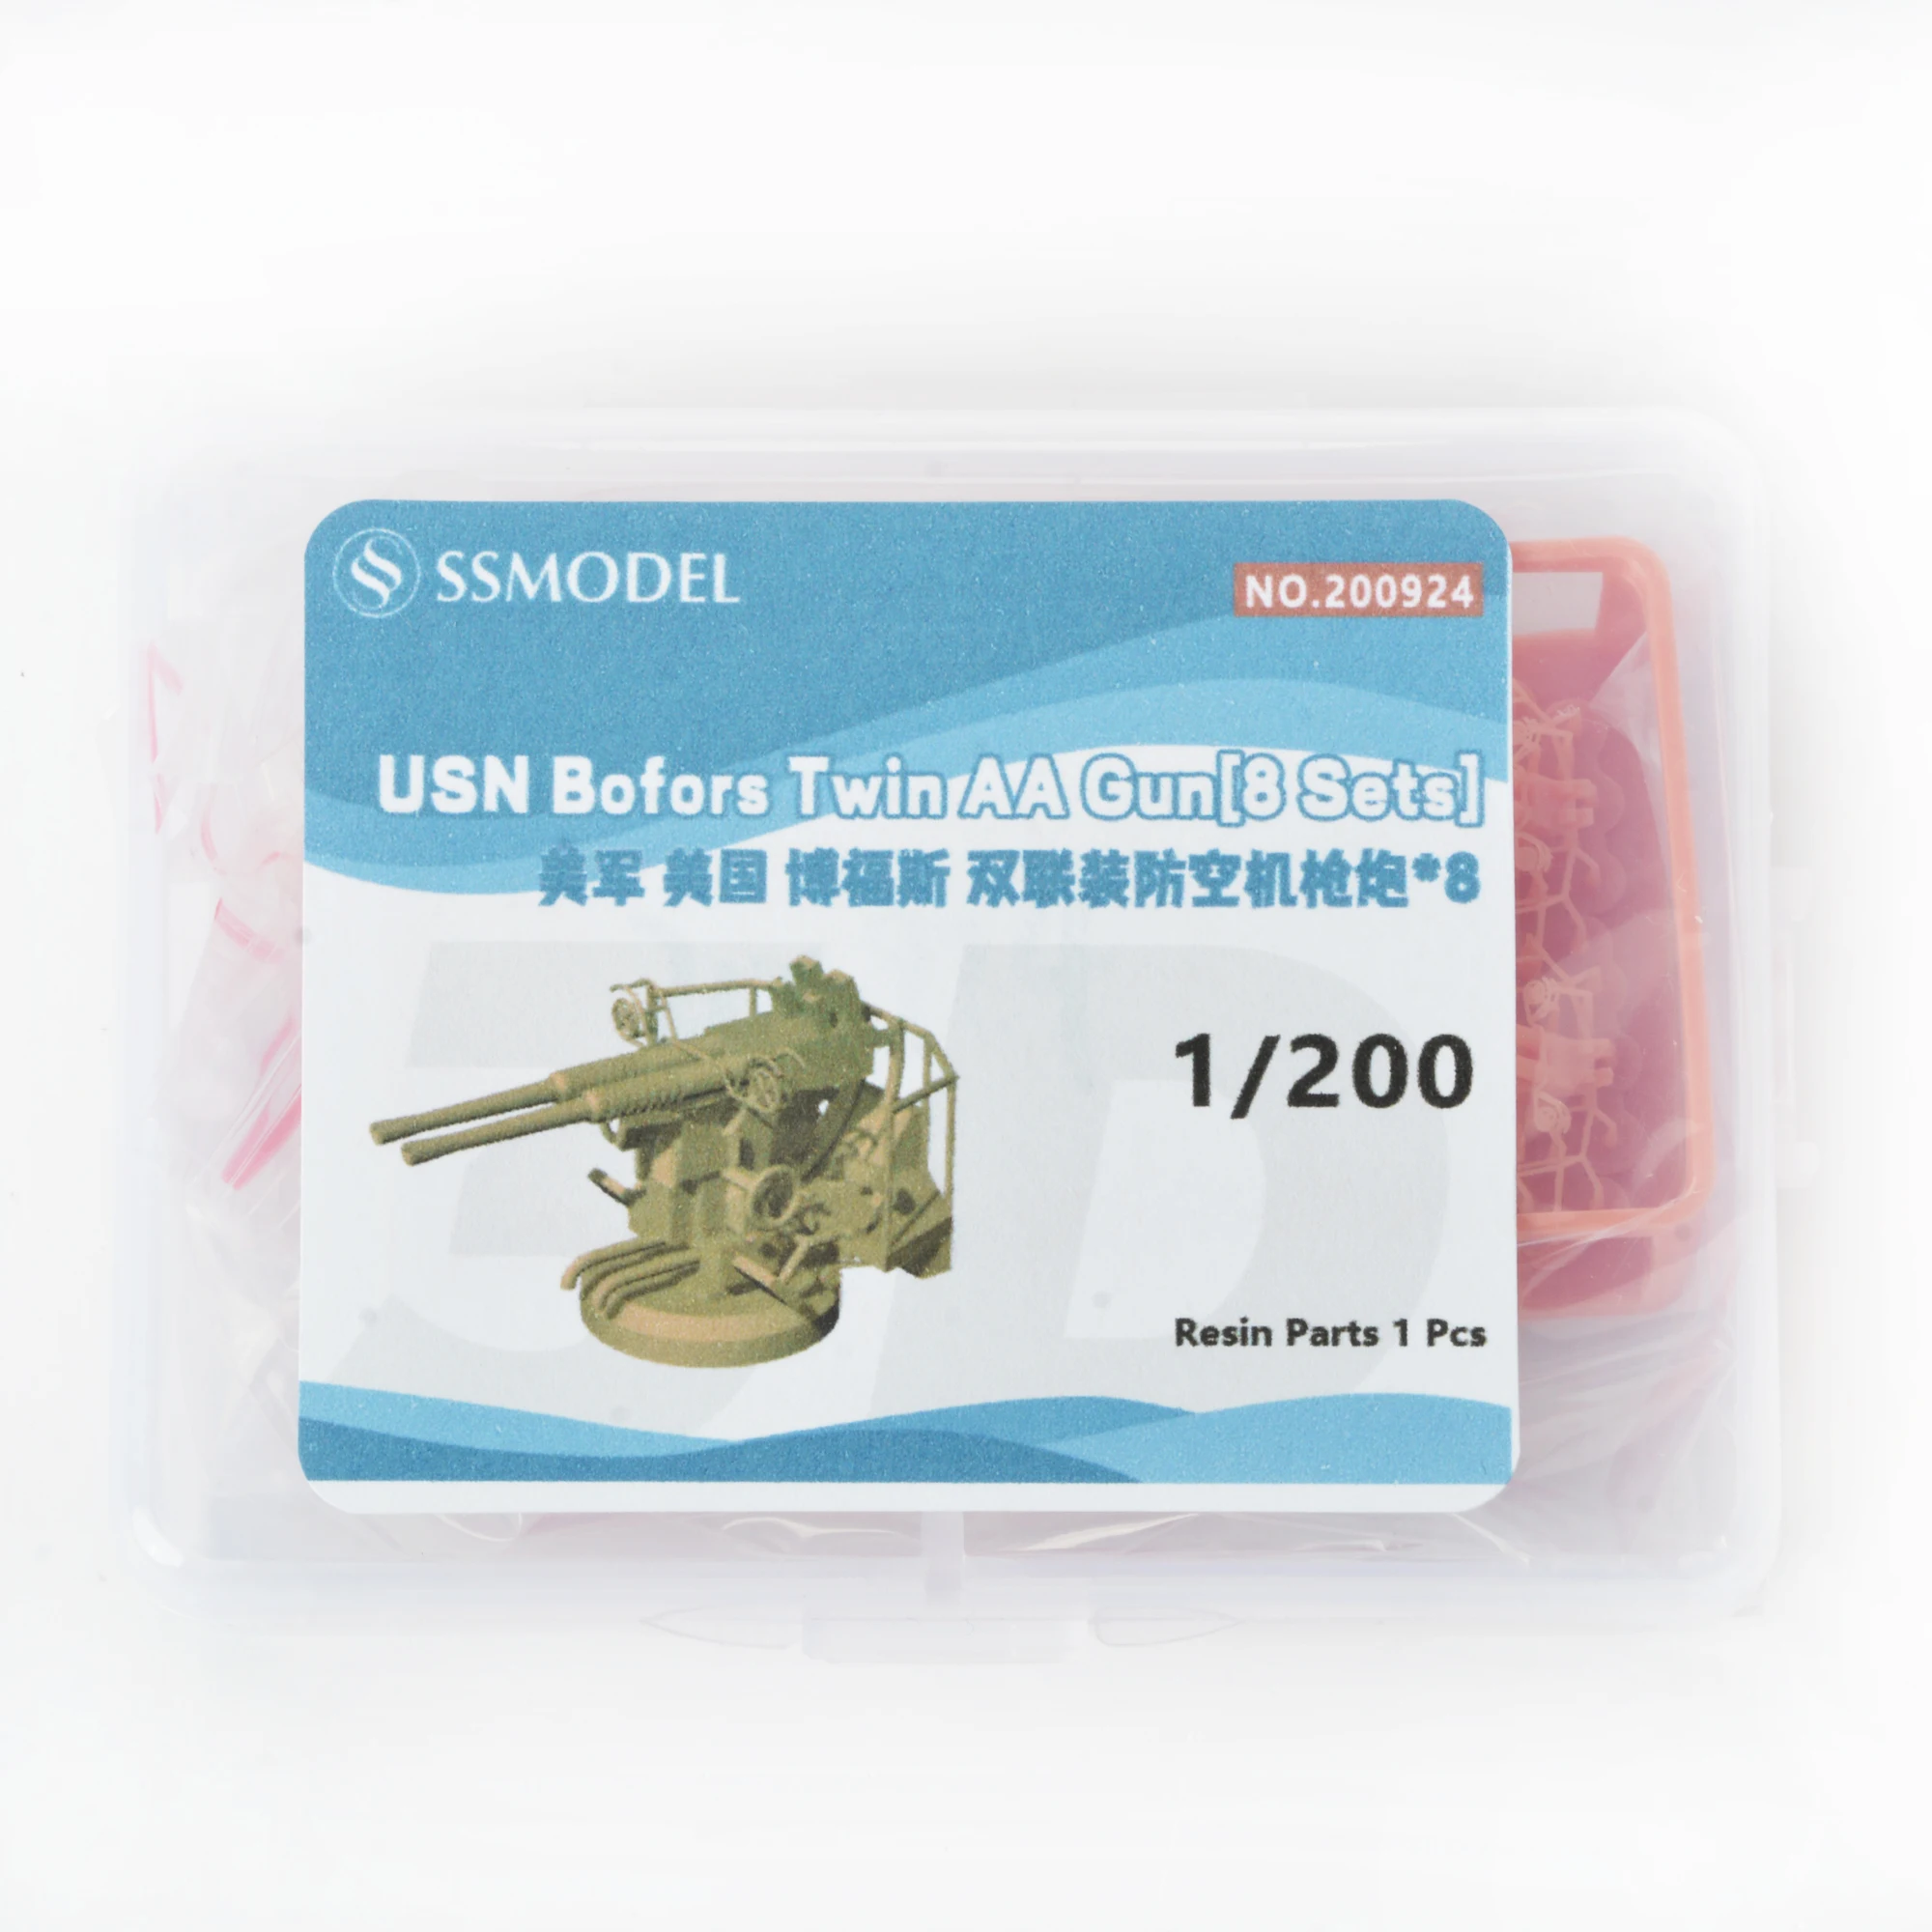 

SSMODEL 200924 1/200 3D Printed Resin Detail Up USN Bofors Twin AA Gun[8 Sets]